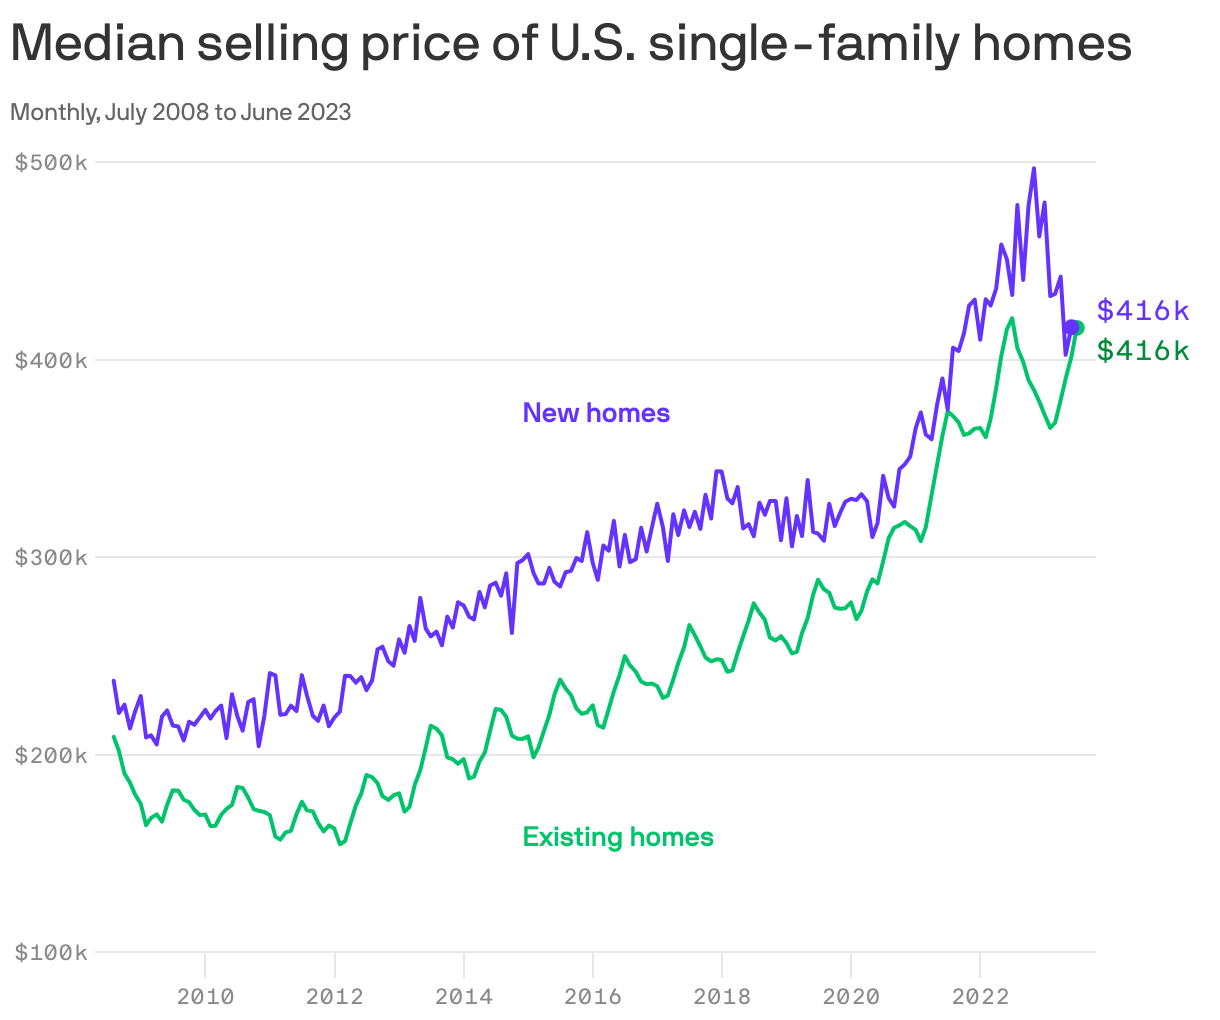 Median selling price of U.S. single-family homes